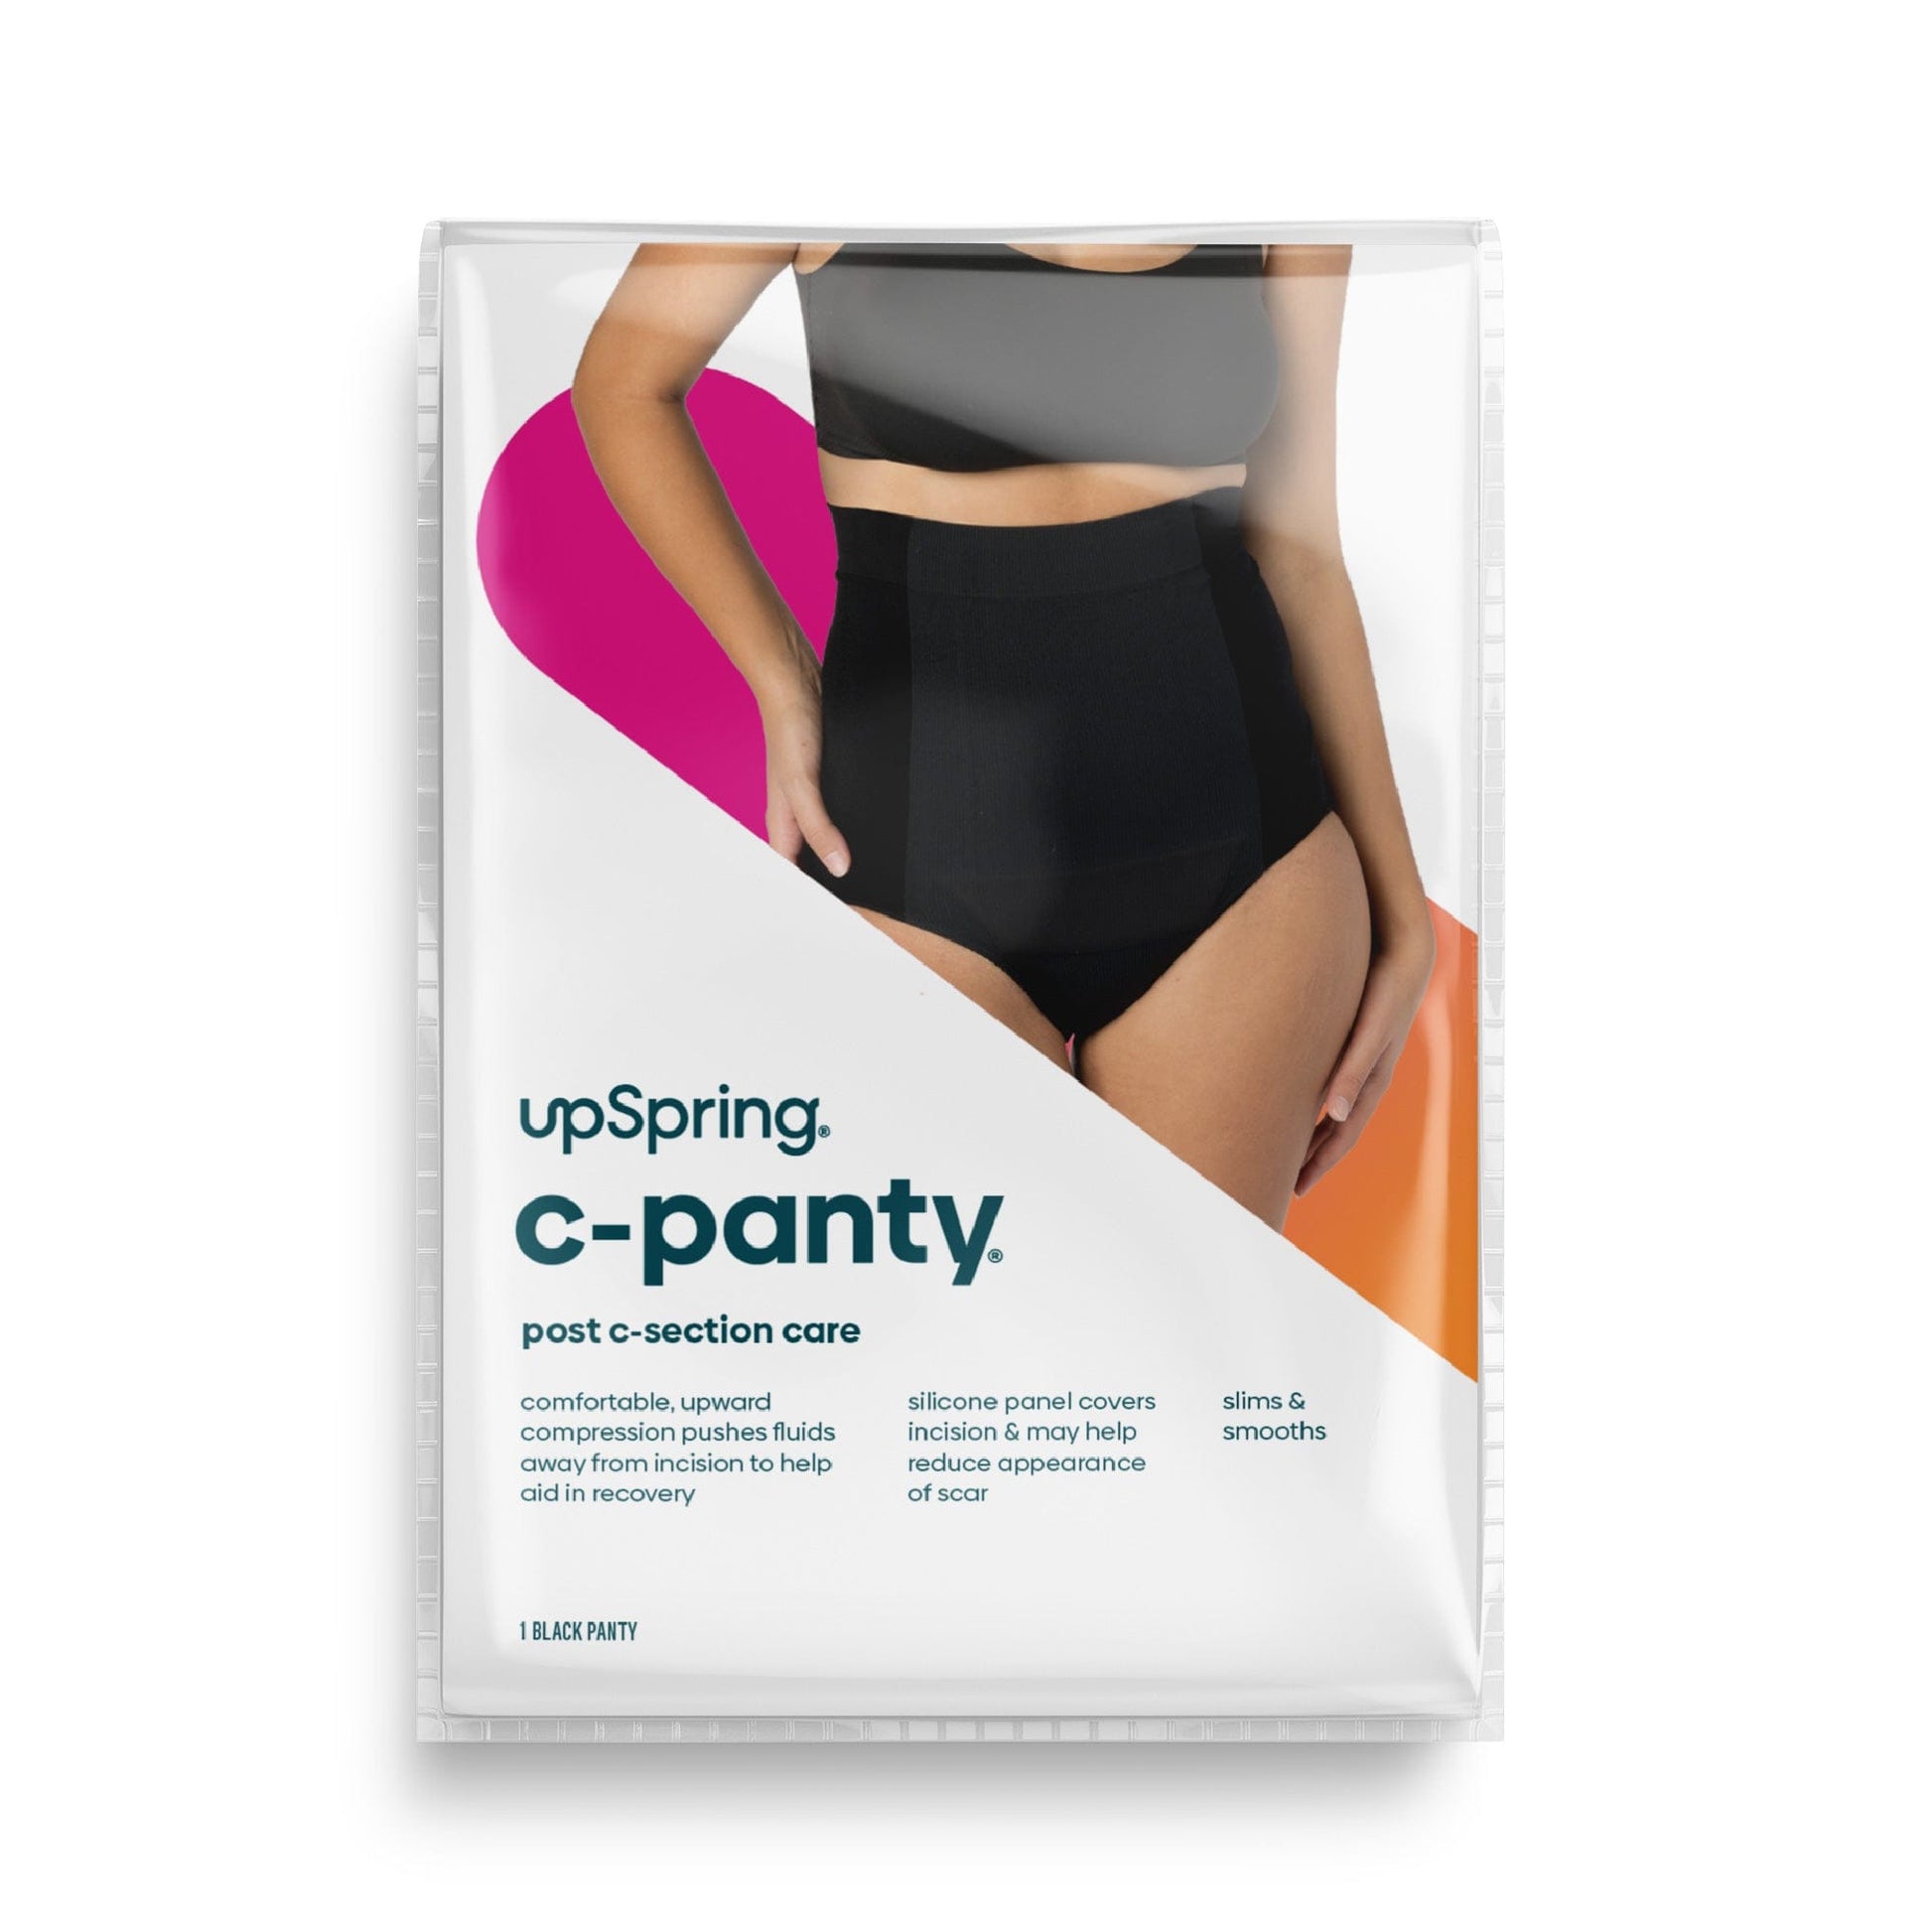  Women's Underwear Panties Subscription Box - One Size